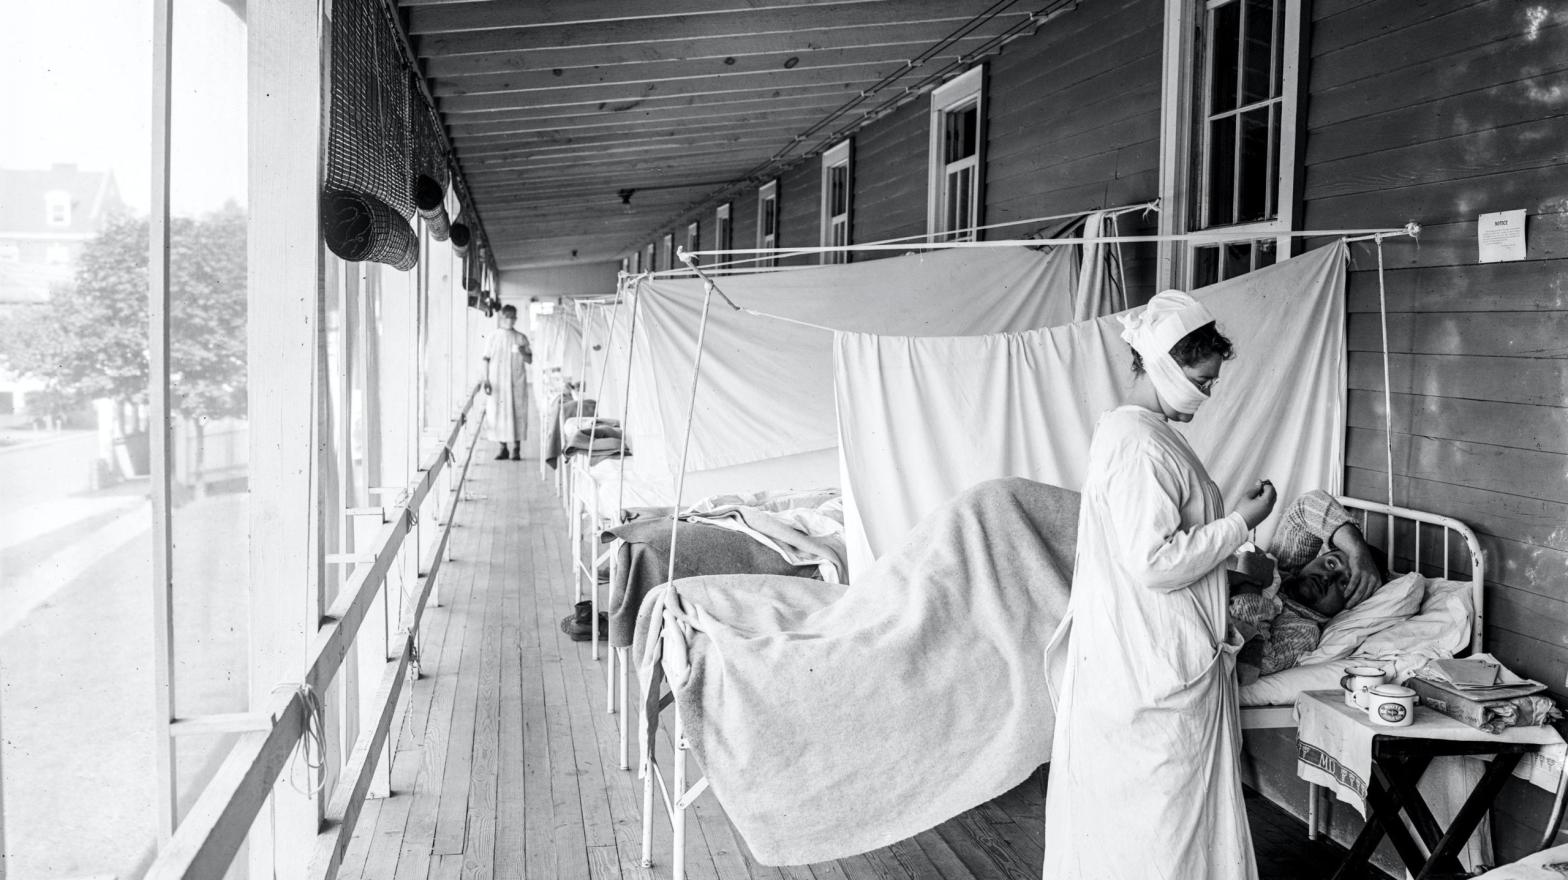 Walter Reed Hospital flu ward (ca. 1910–1920). (Photo: Original from Library of Congress. Digitally enhanced by rawpixel.)